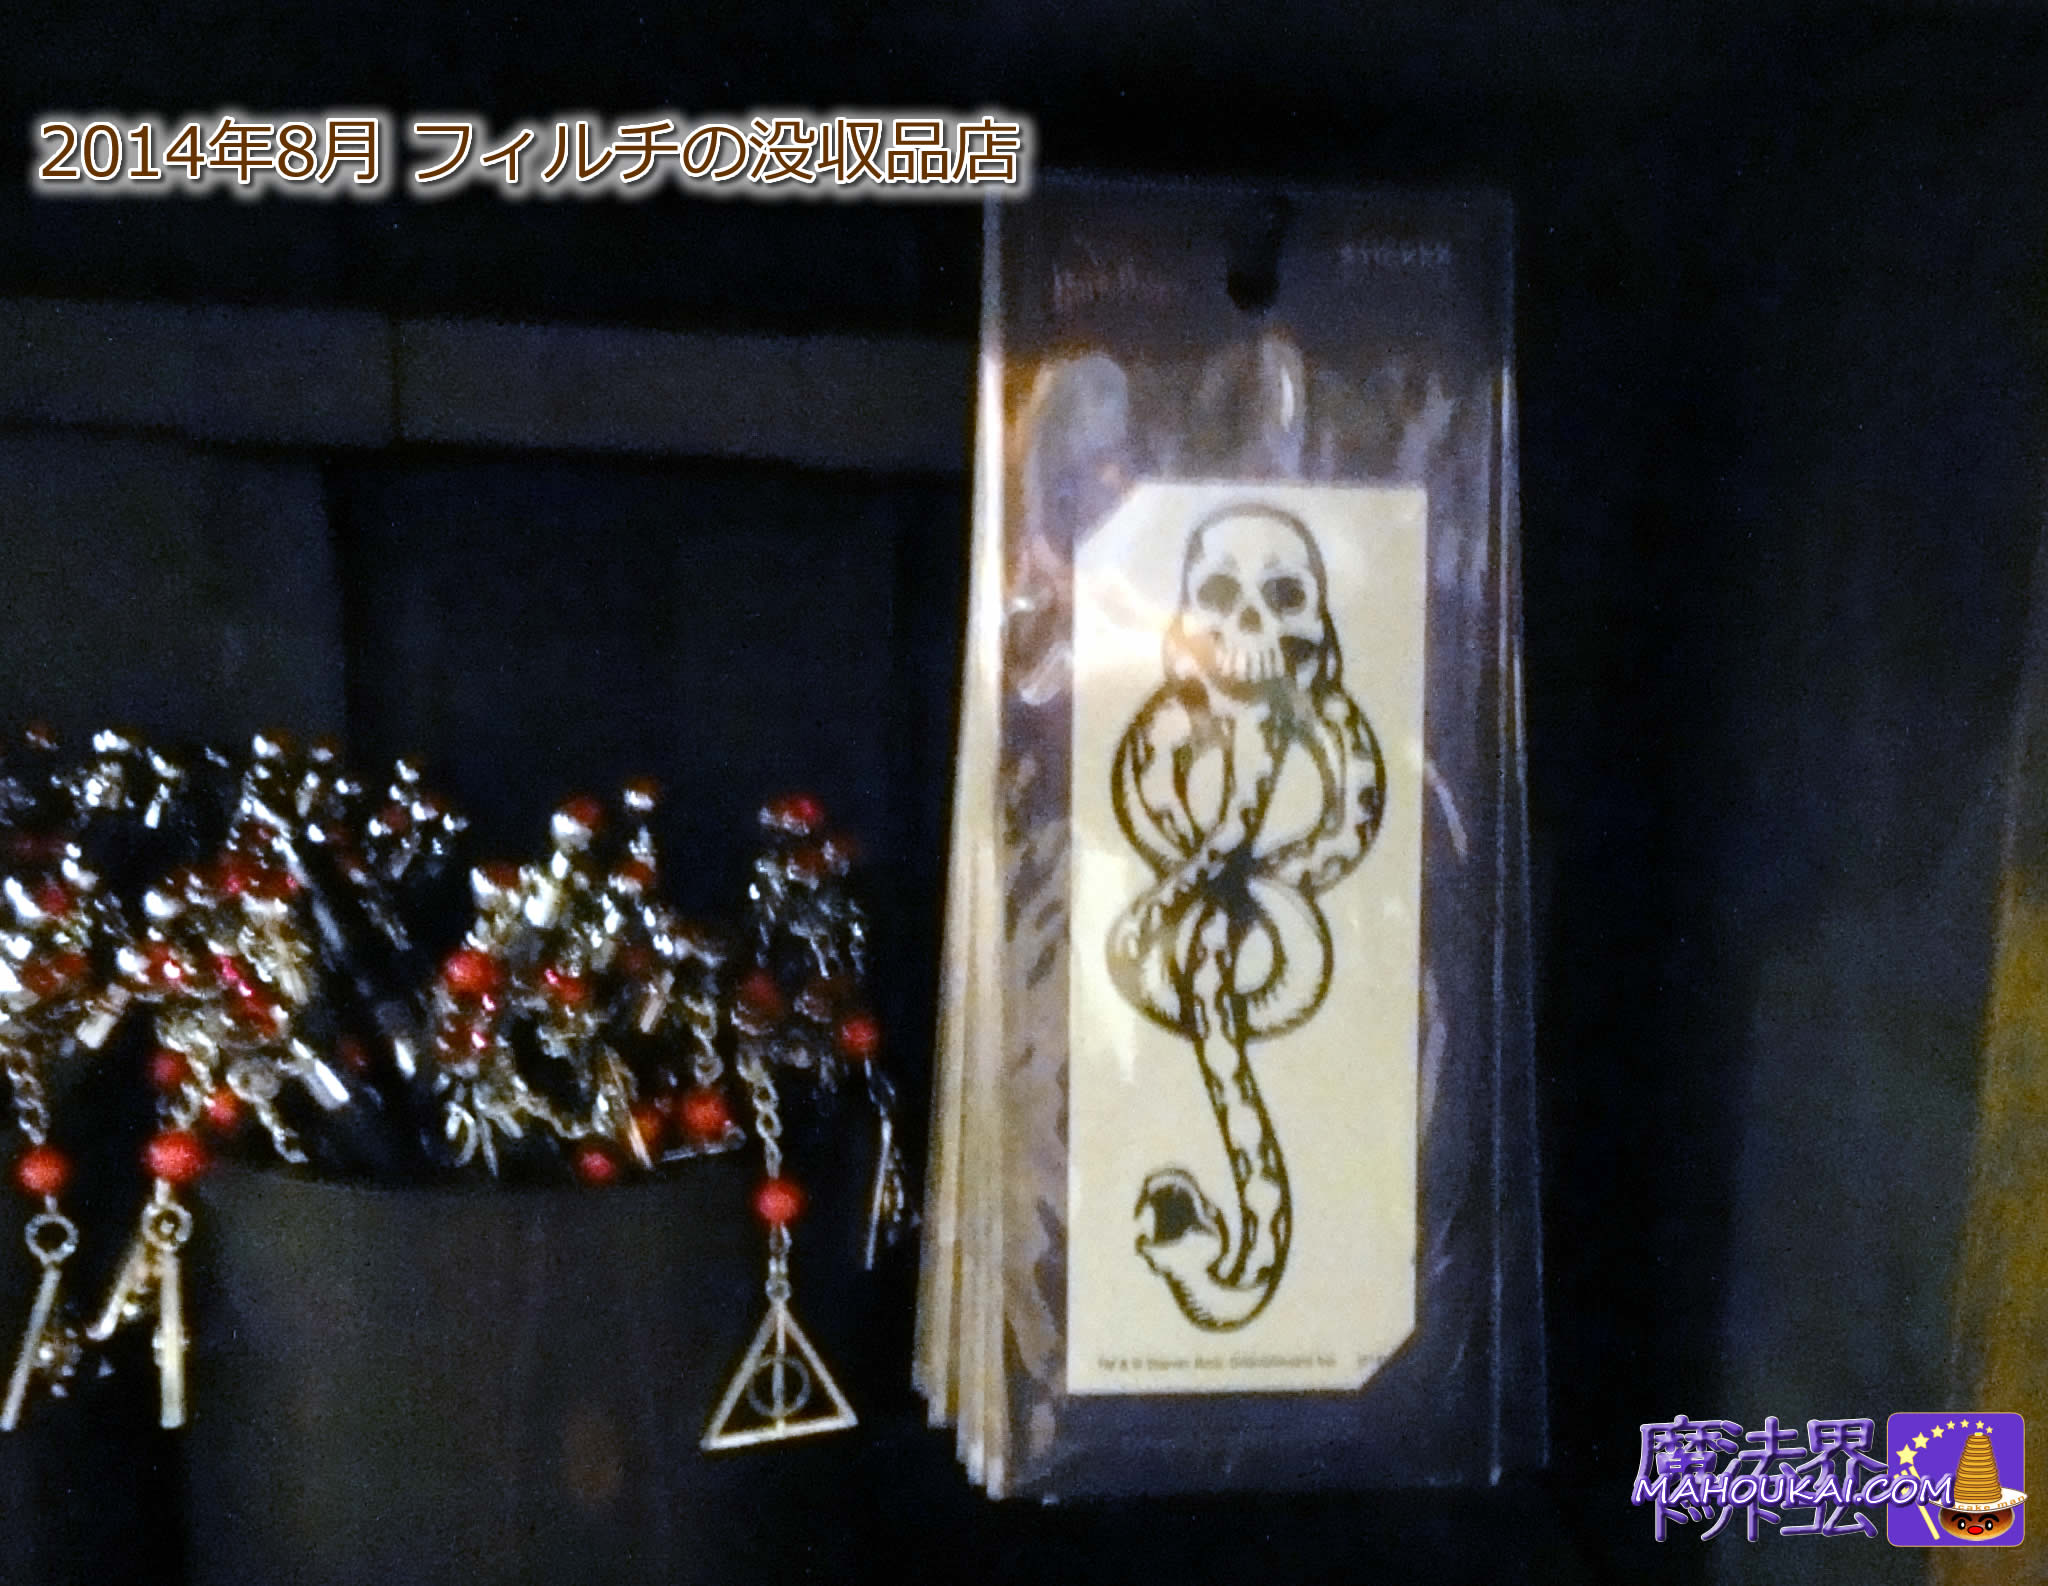 Dark Mark Tattoo Stickers, sold (past tense) in the USJ Filch shop, 'Harry Potter Area'.